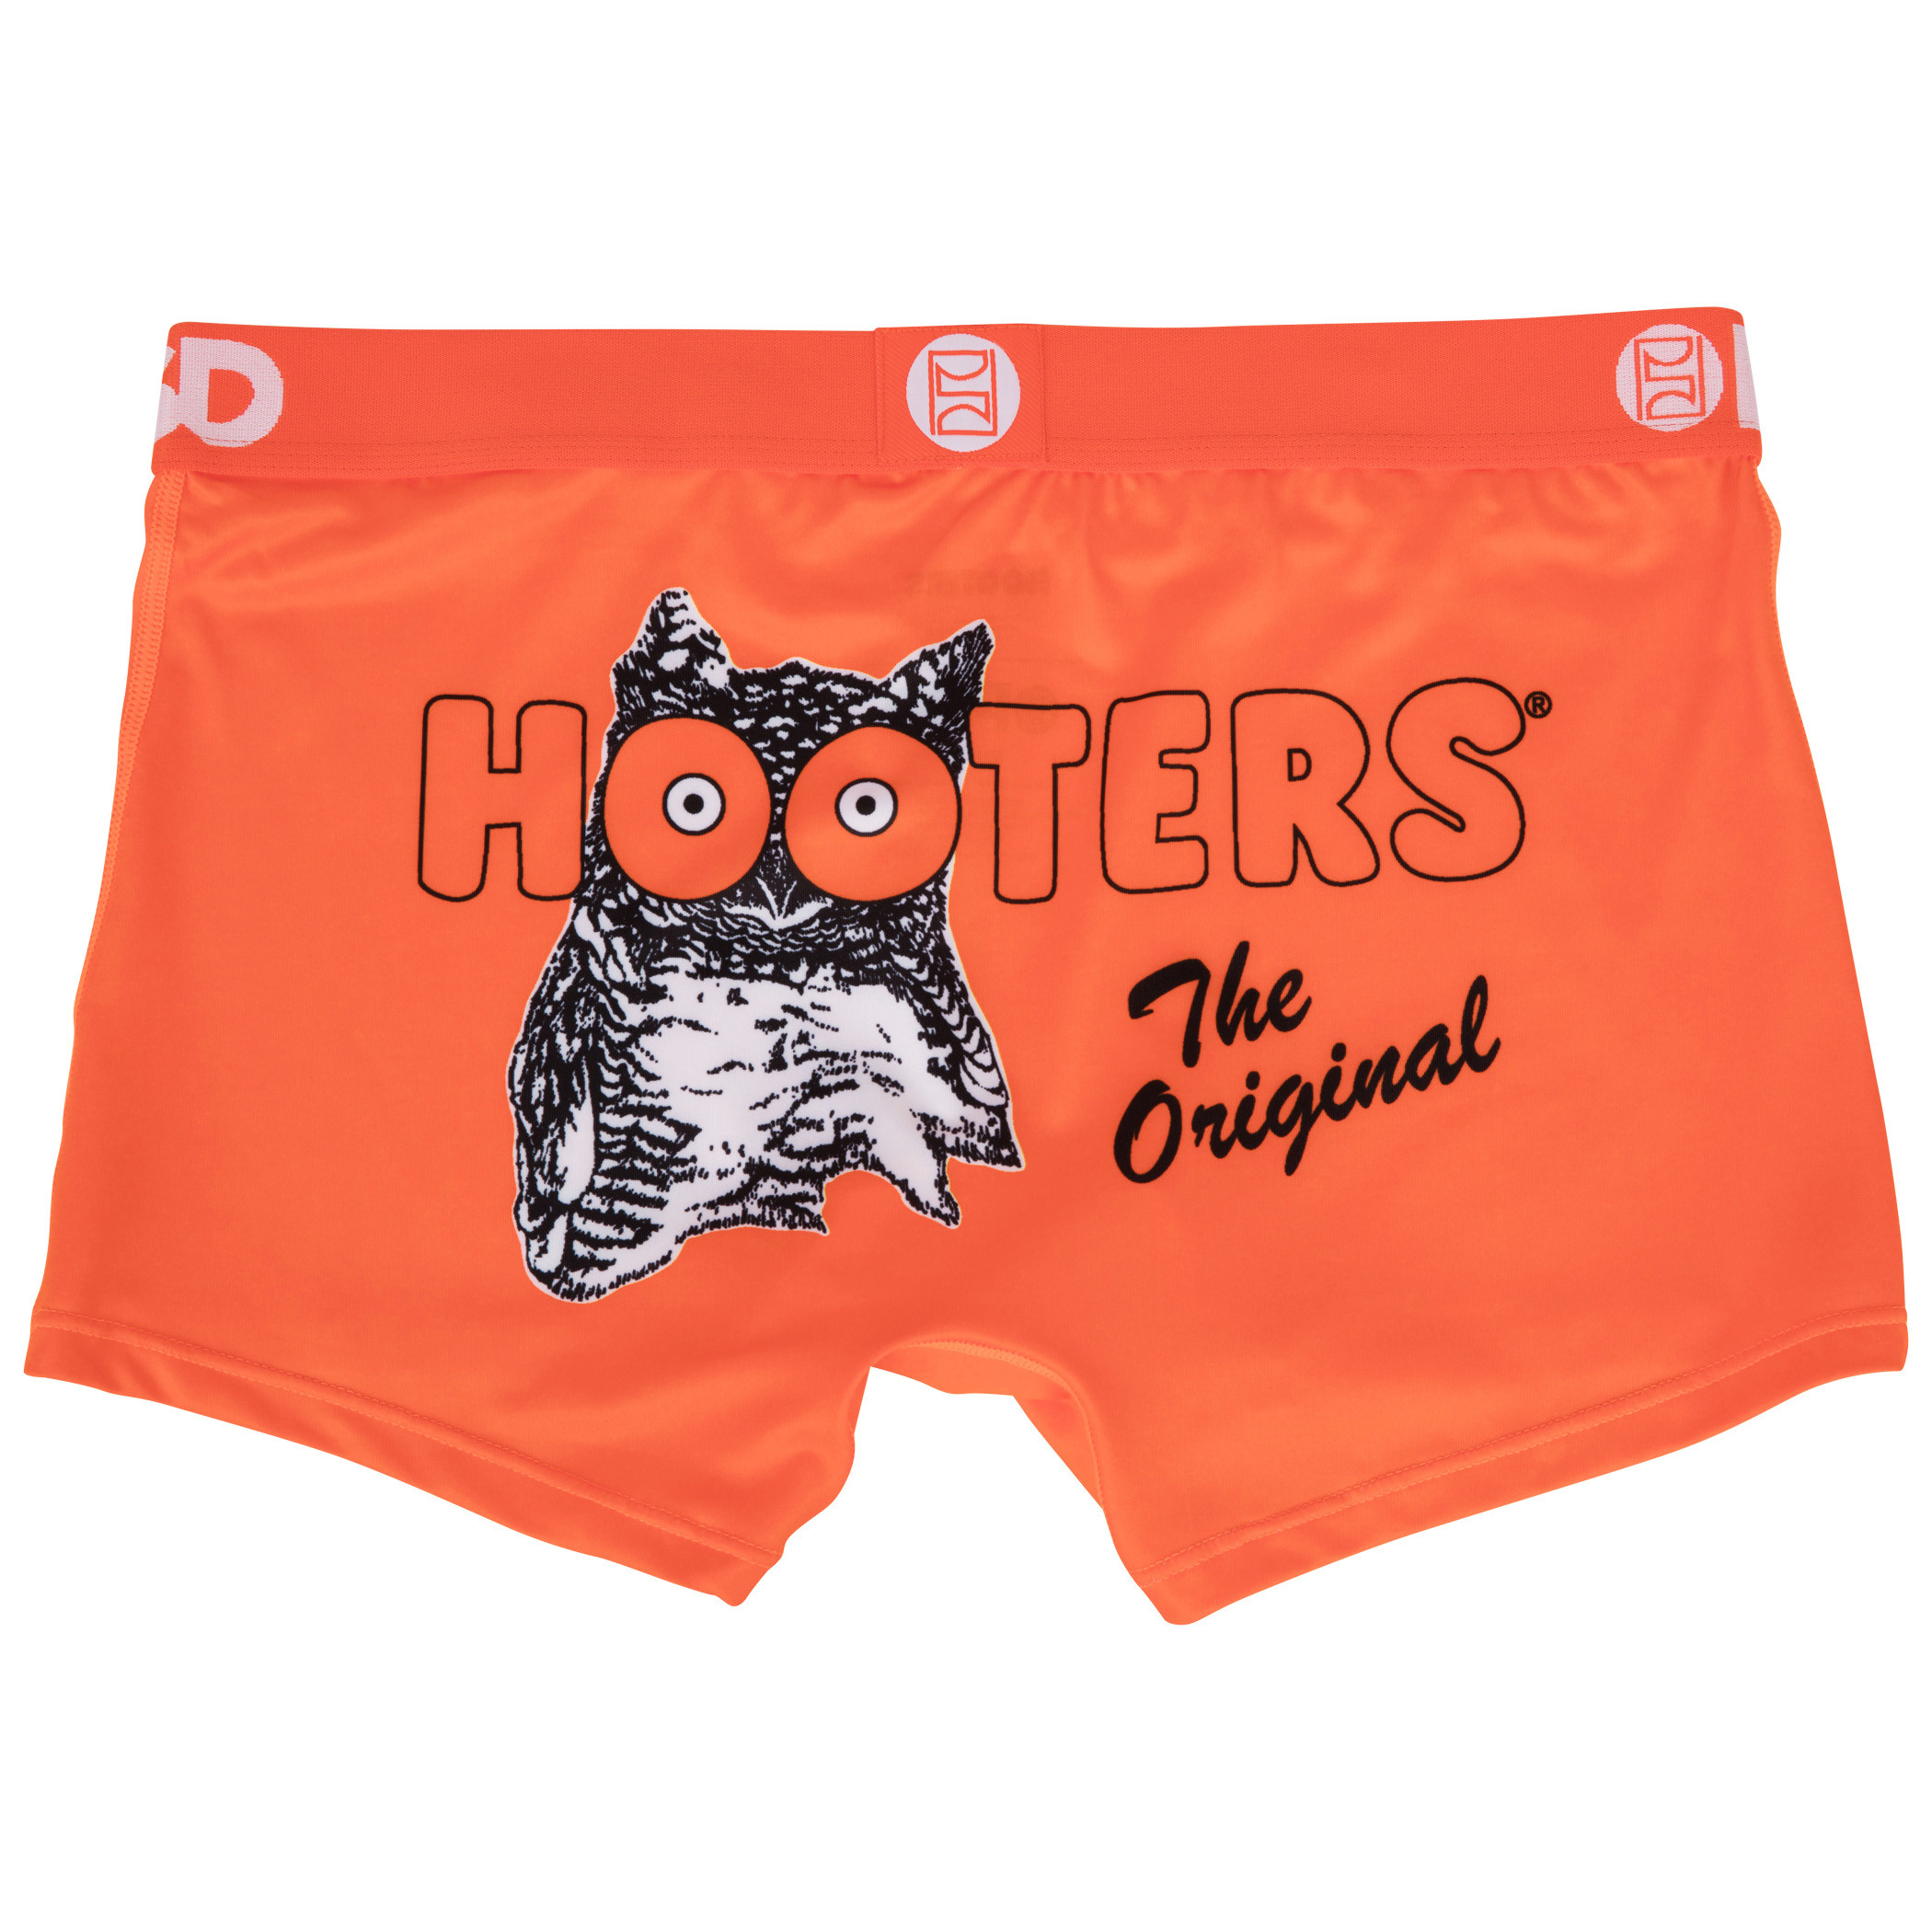 Hooters Restaurant Original Uniform PSD Boy Shorts Underwear